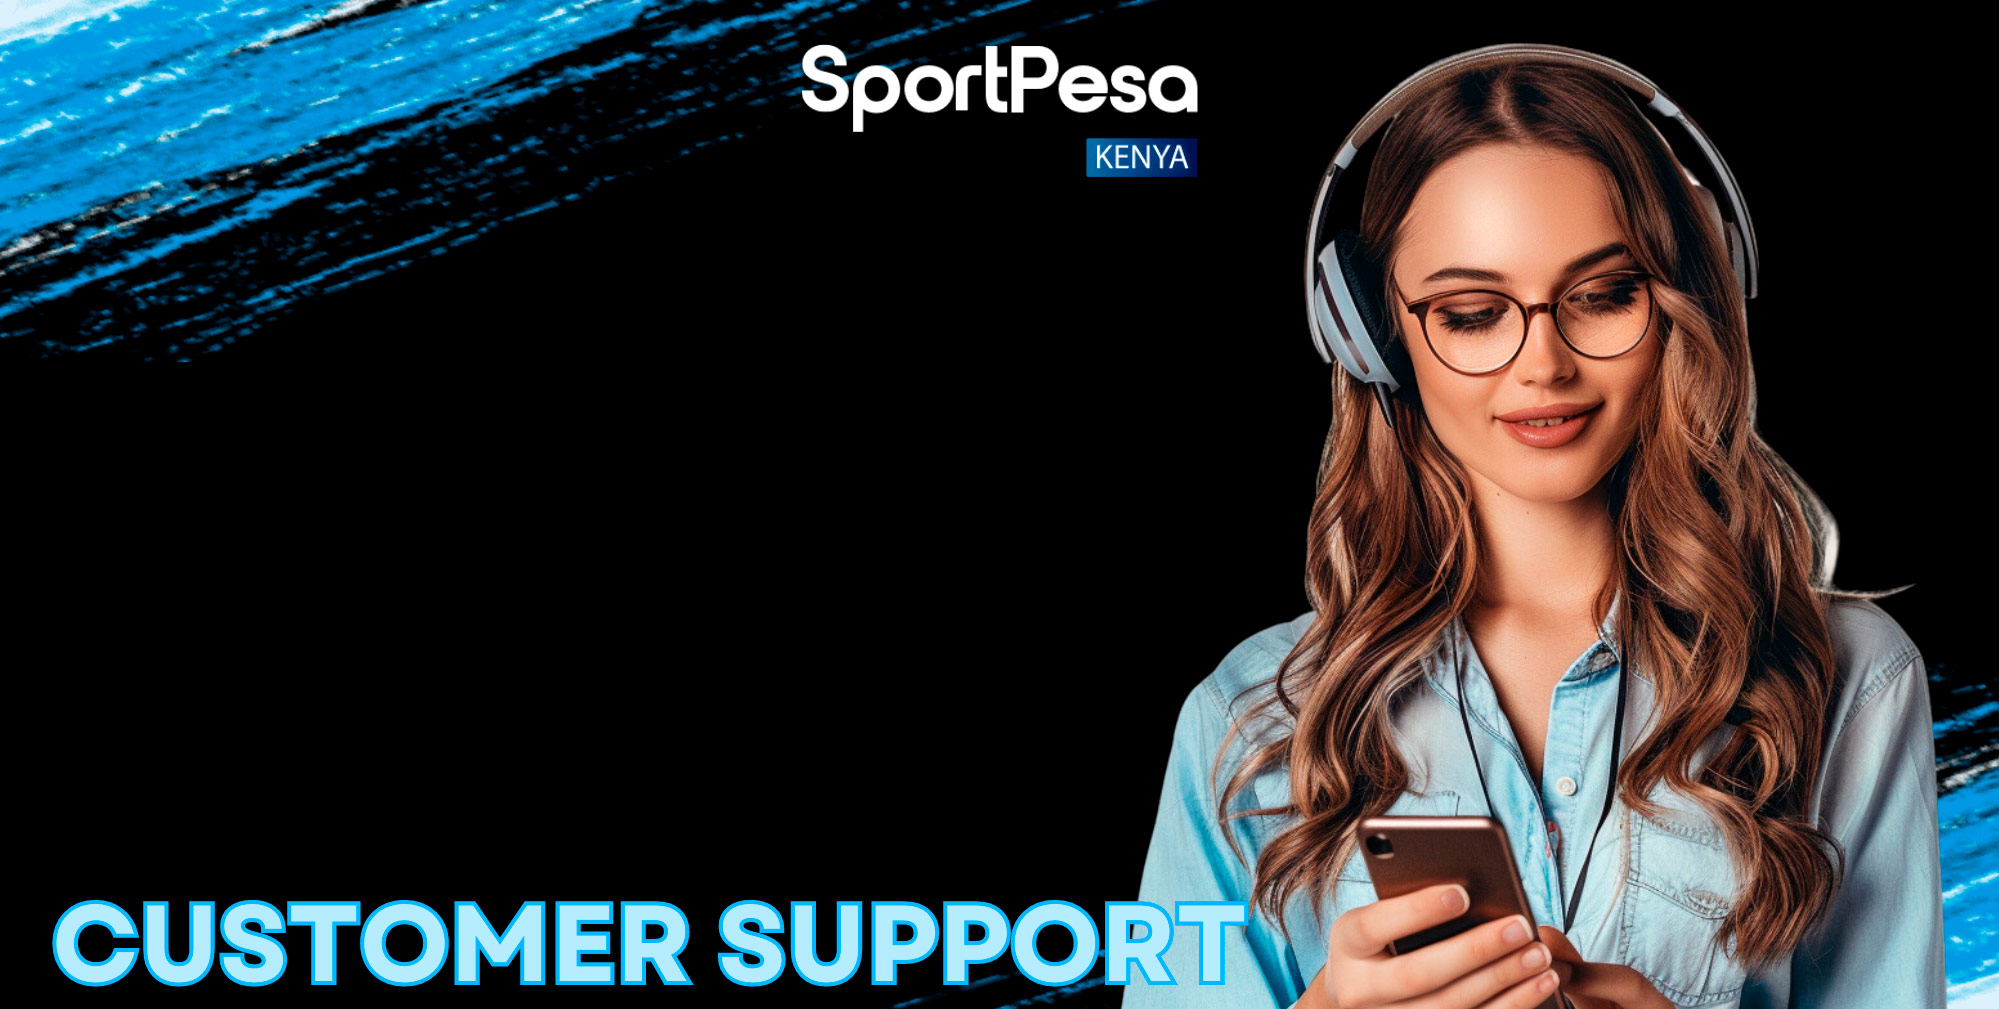 Sportpesa Kenya offers customer support